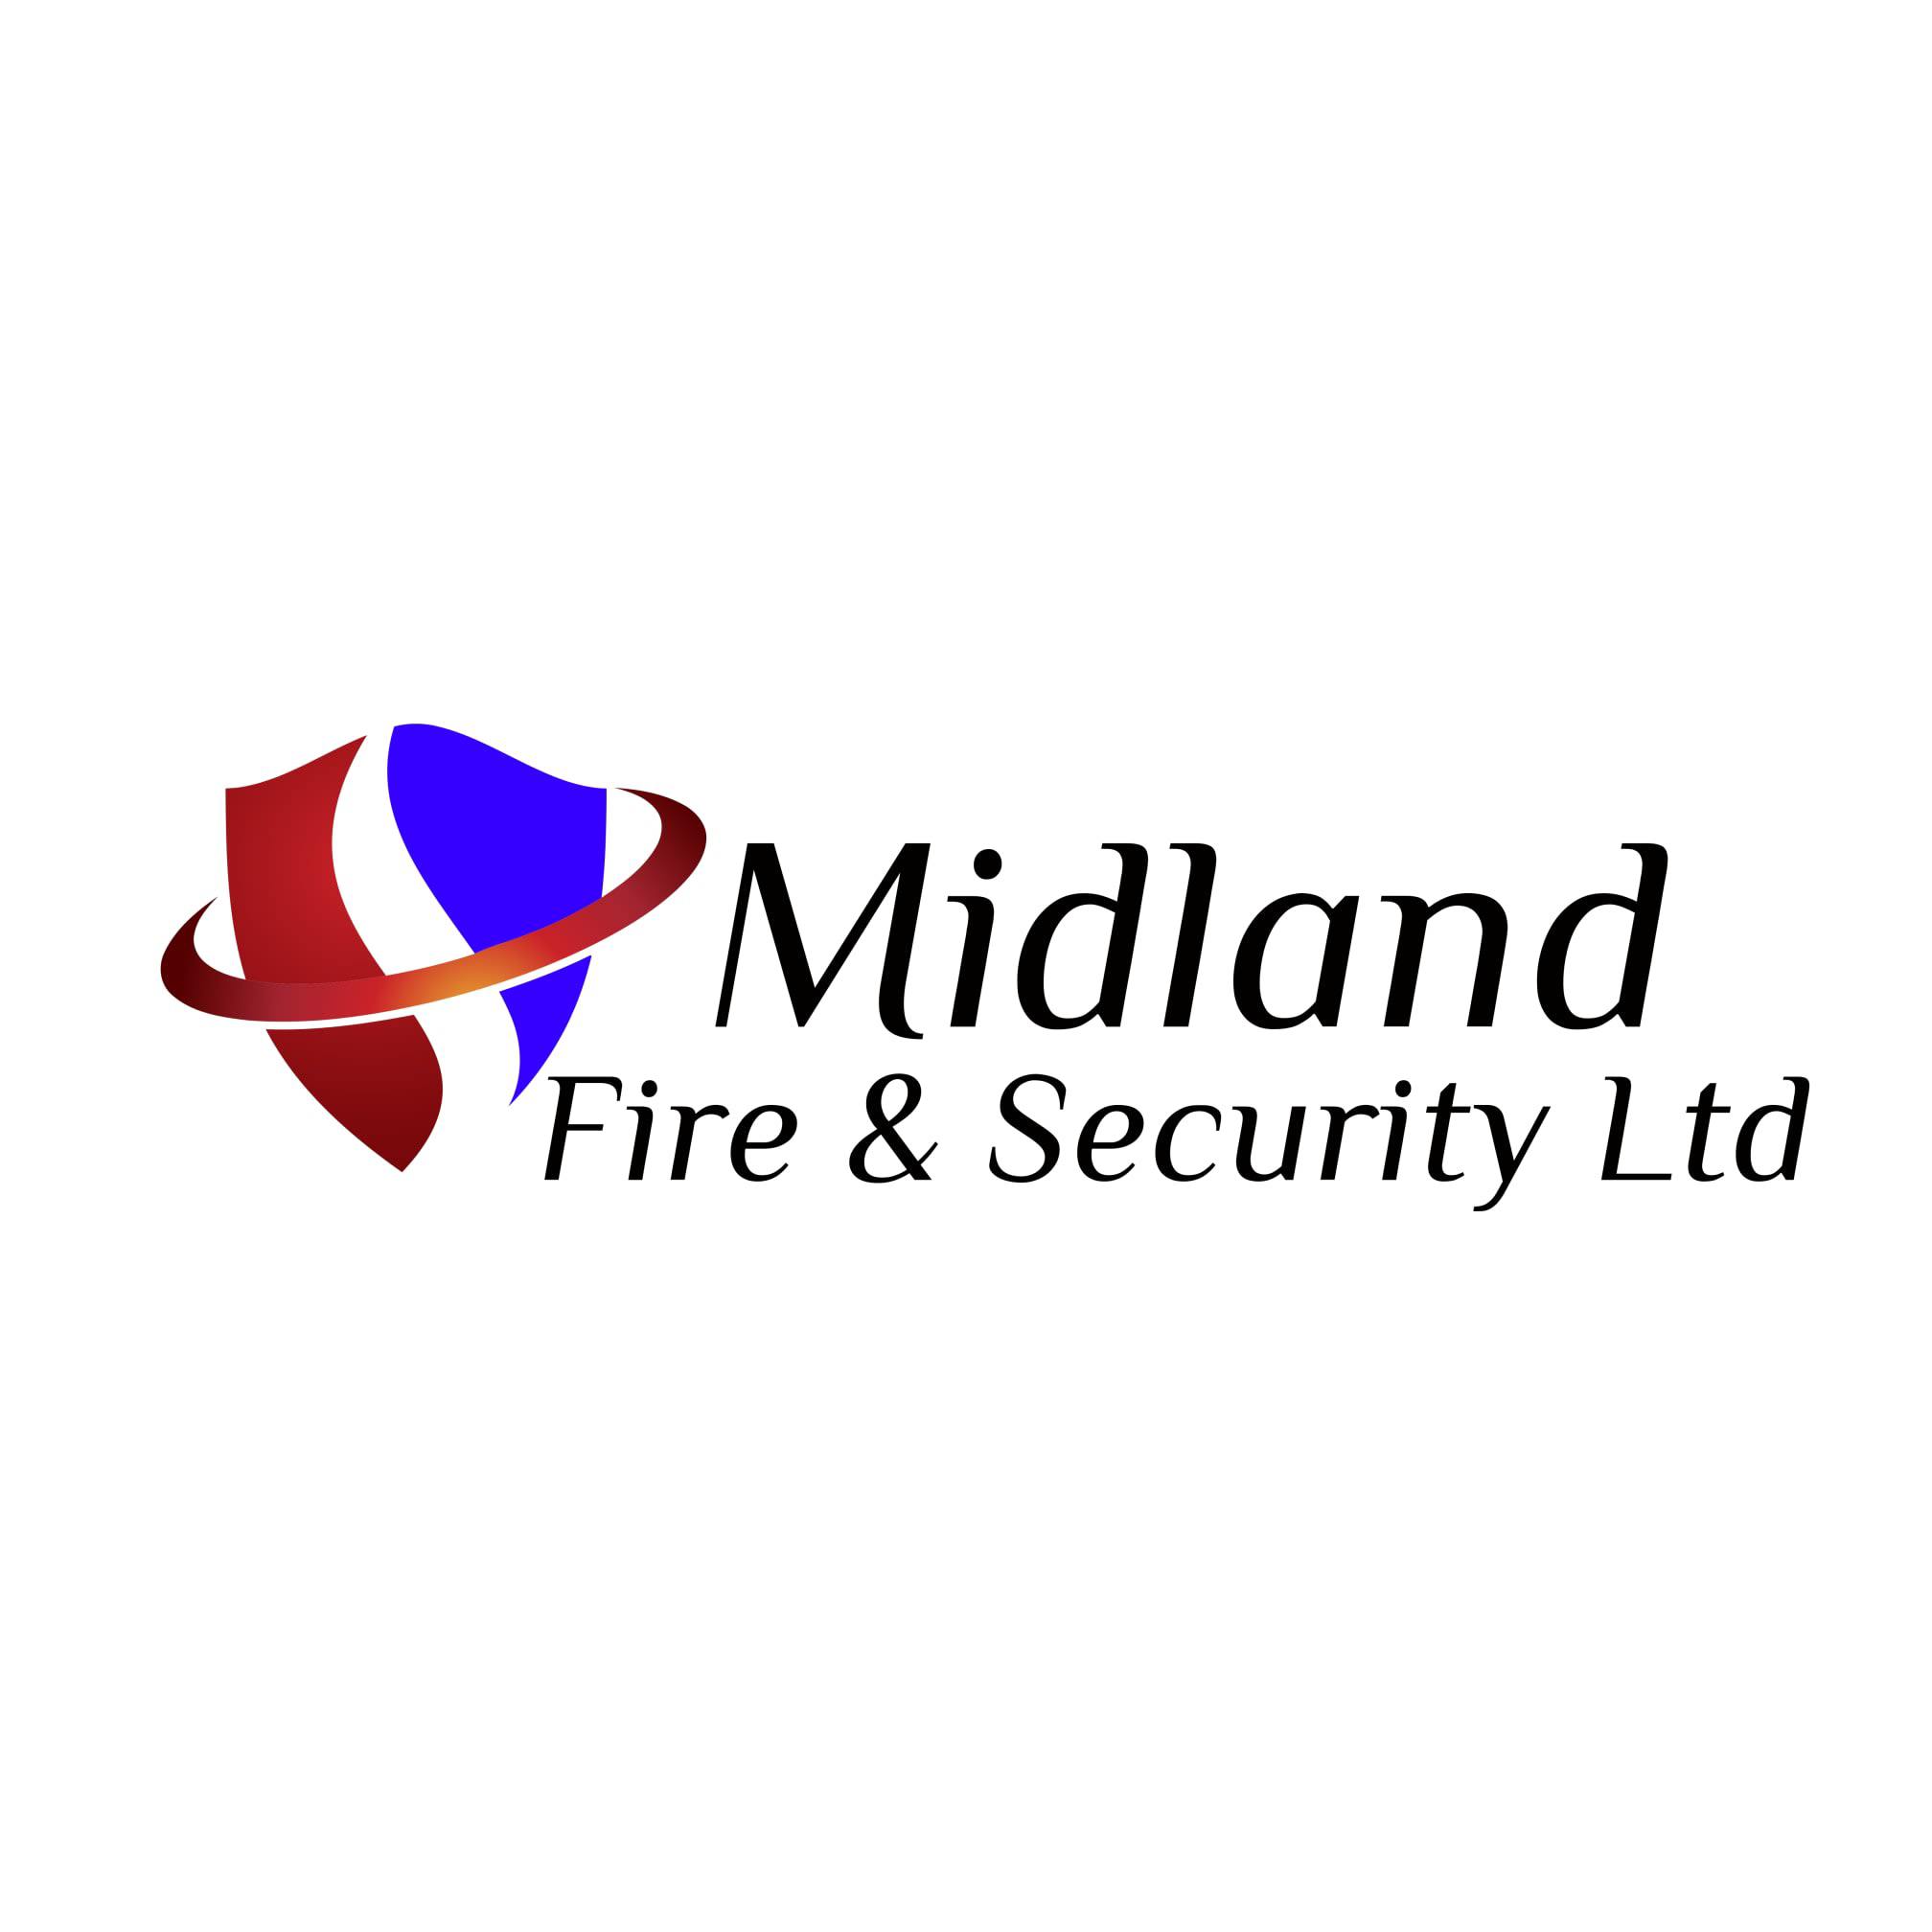 Midland Fire & Security Ltd Logo